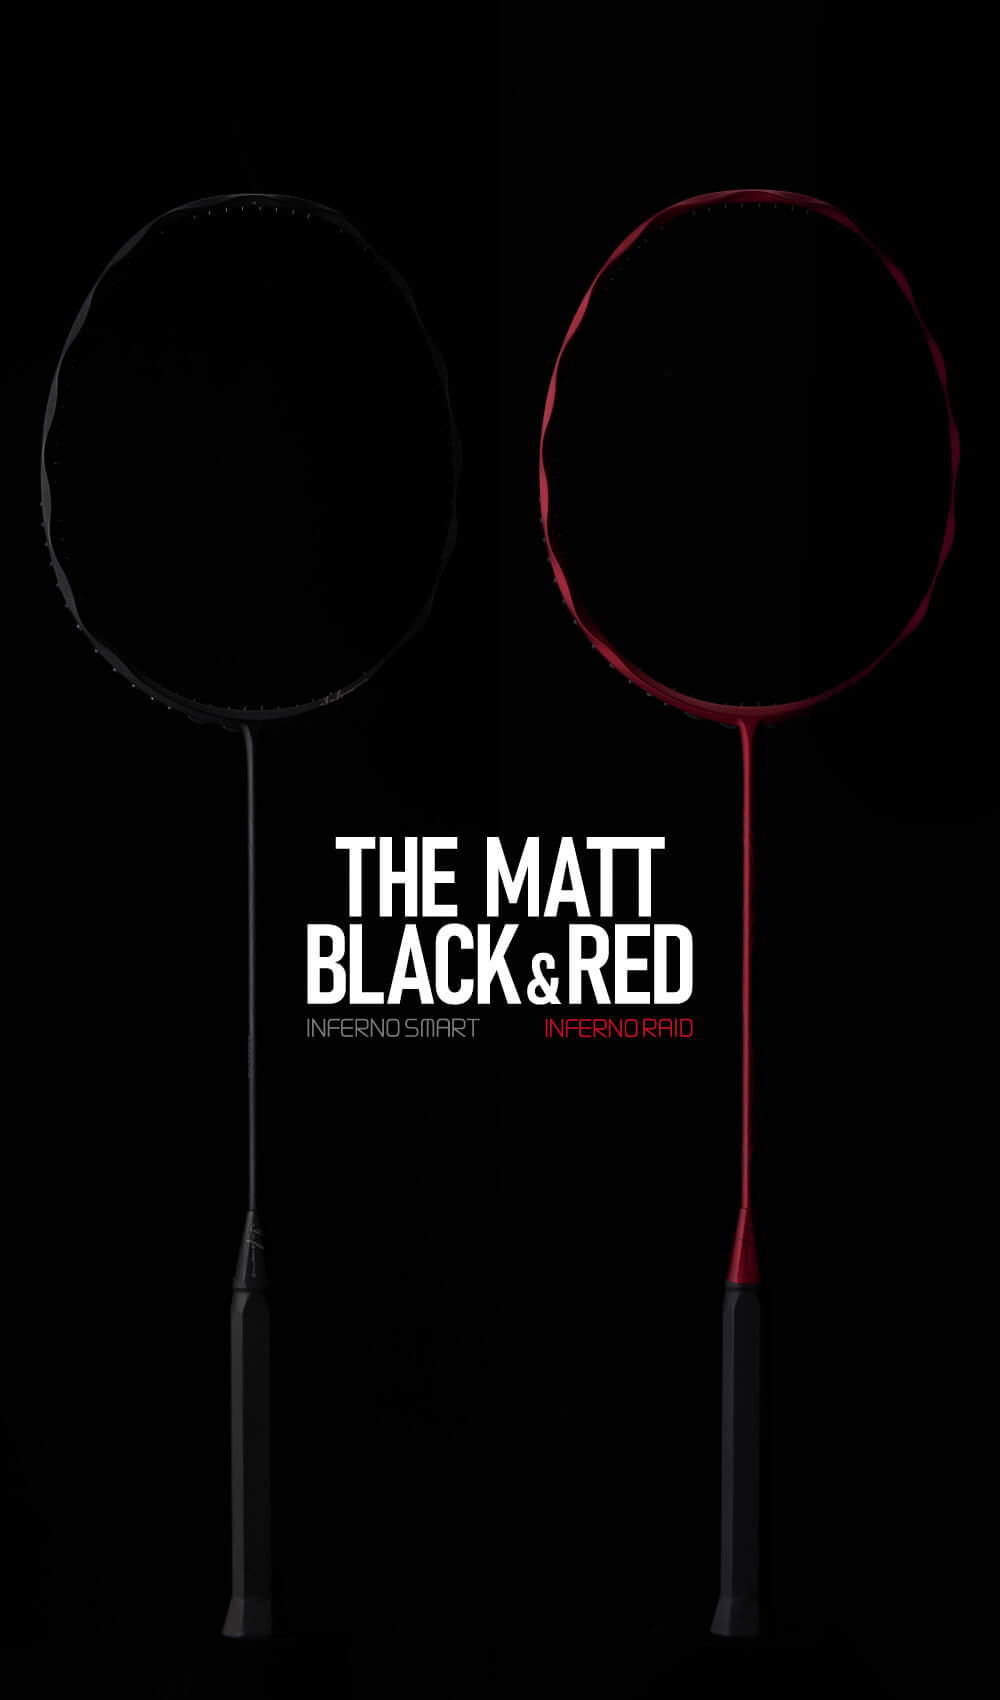 THE MATT BLACK & RED